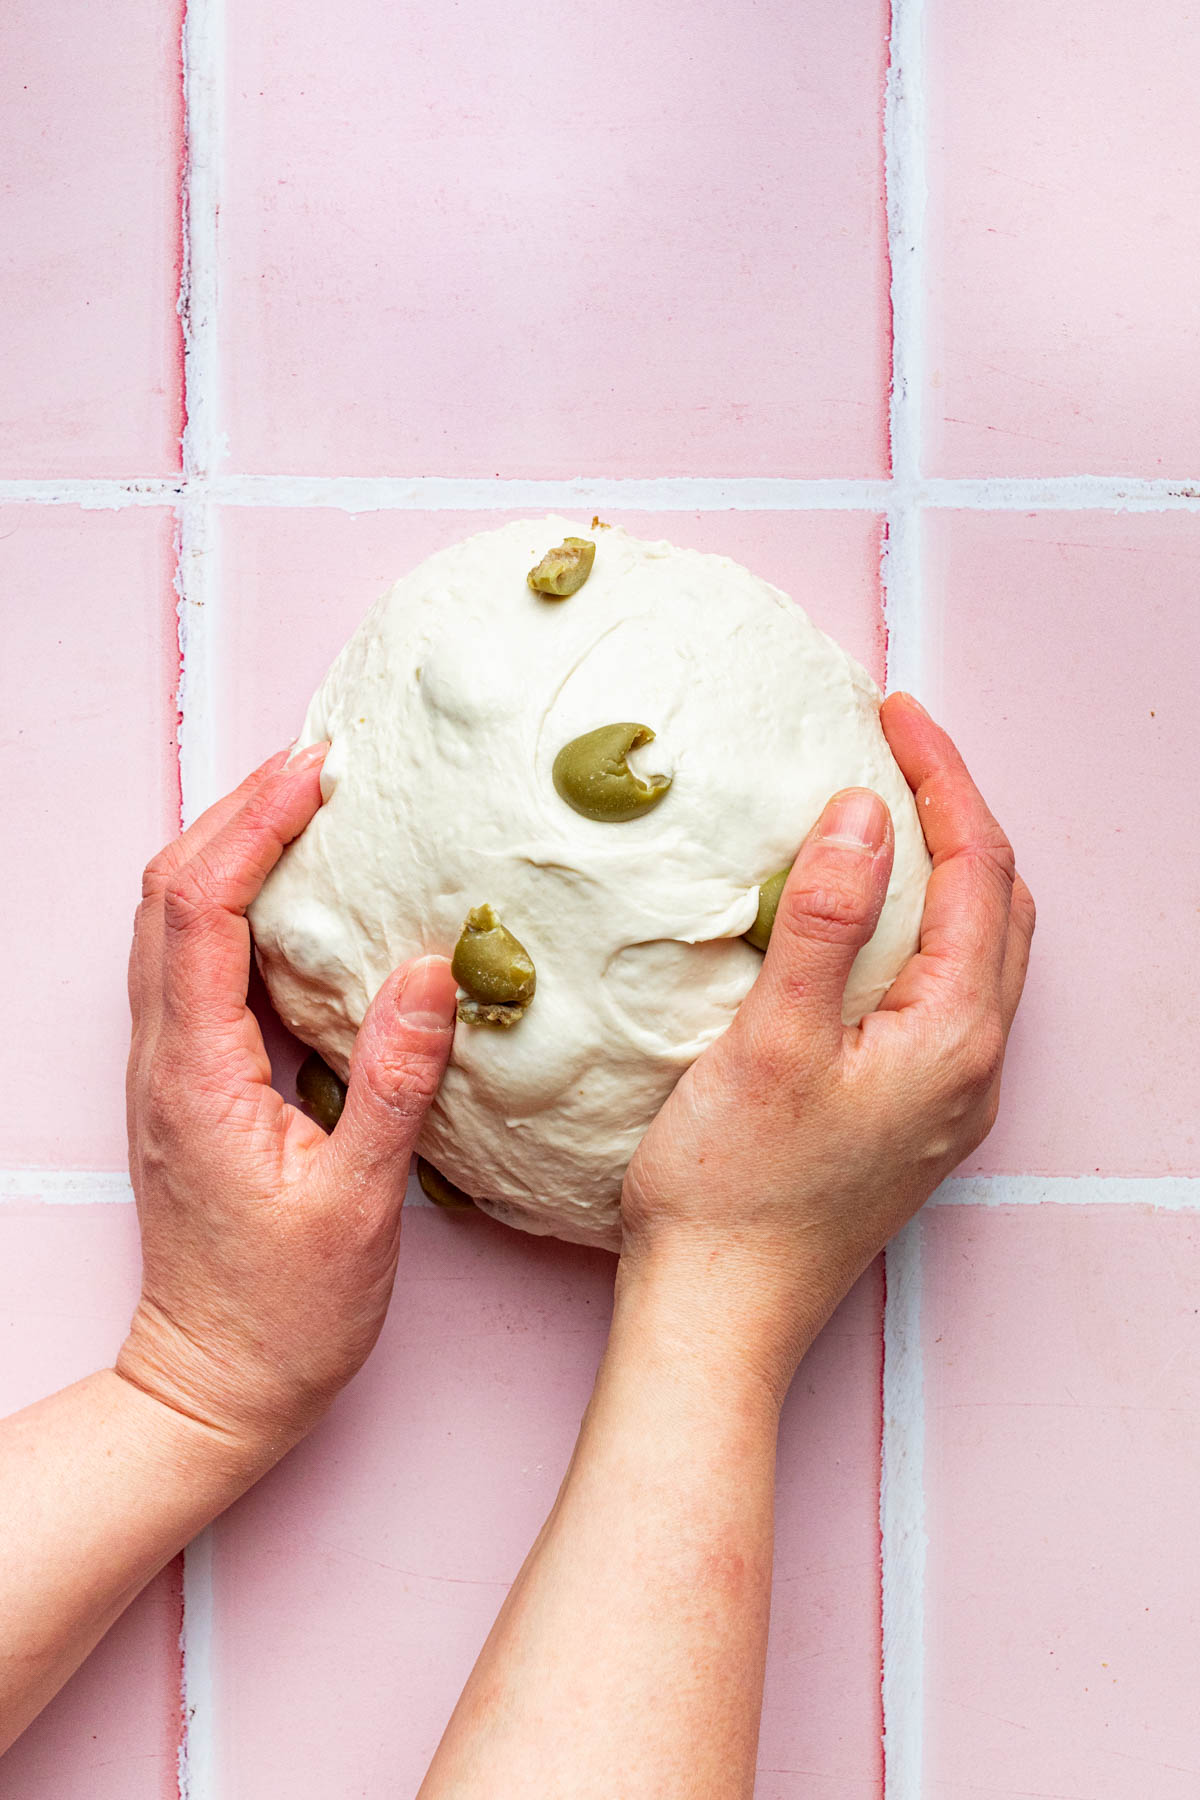 Hands shaping bread dough into a boule shape.